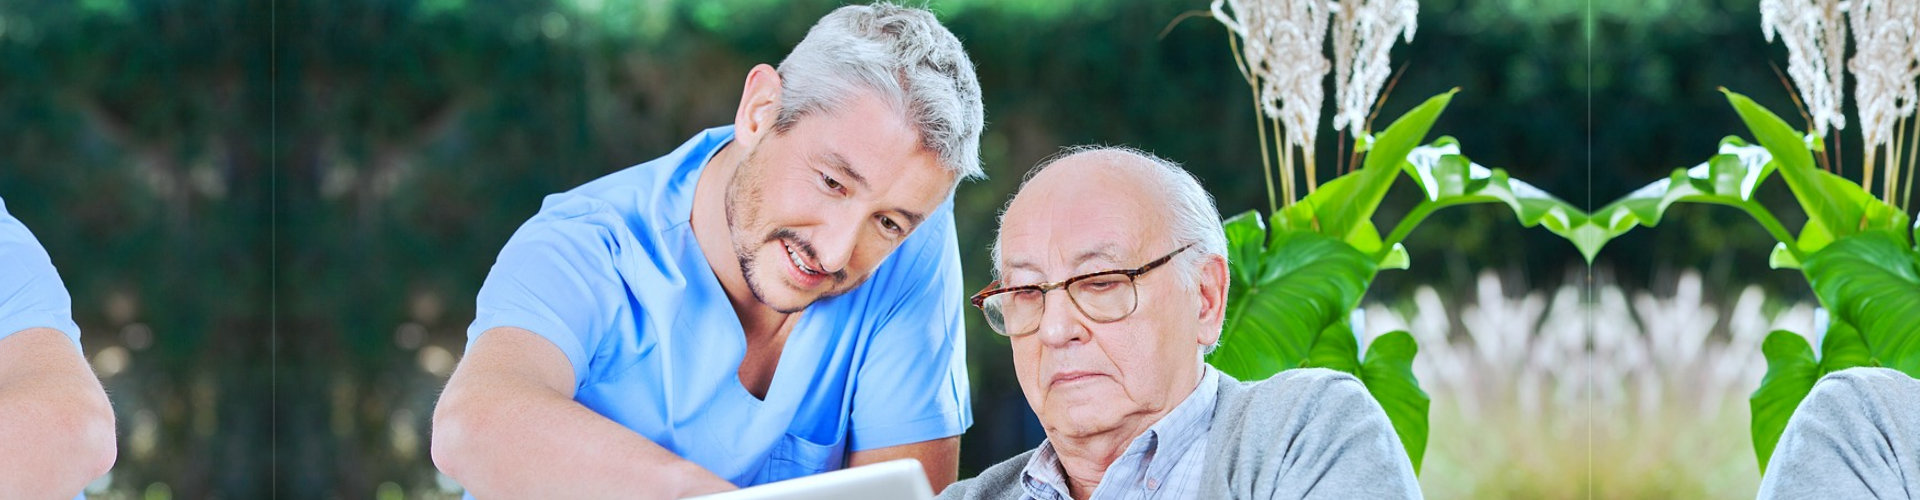 caregiver and senior man reading